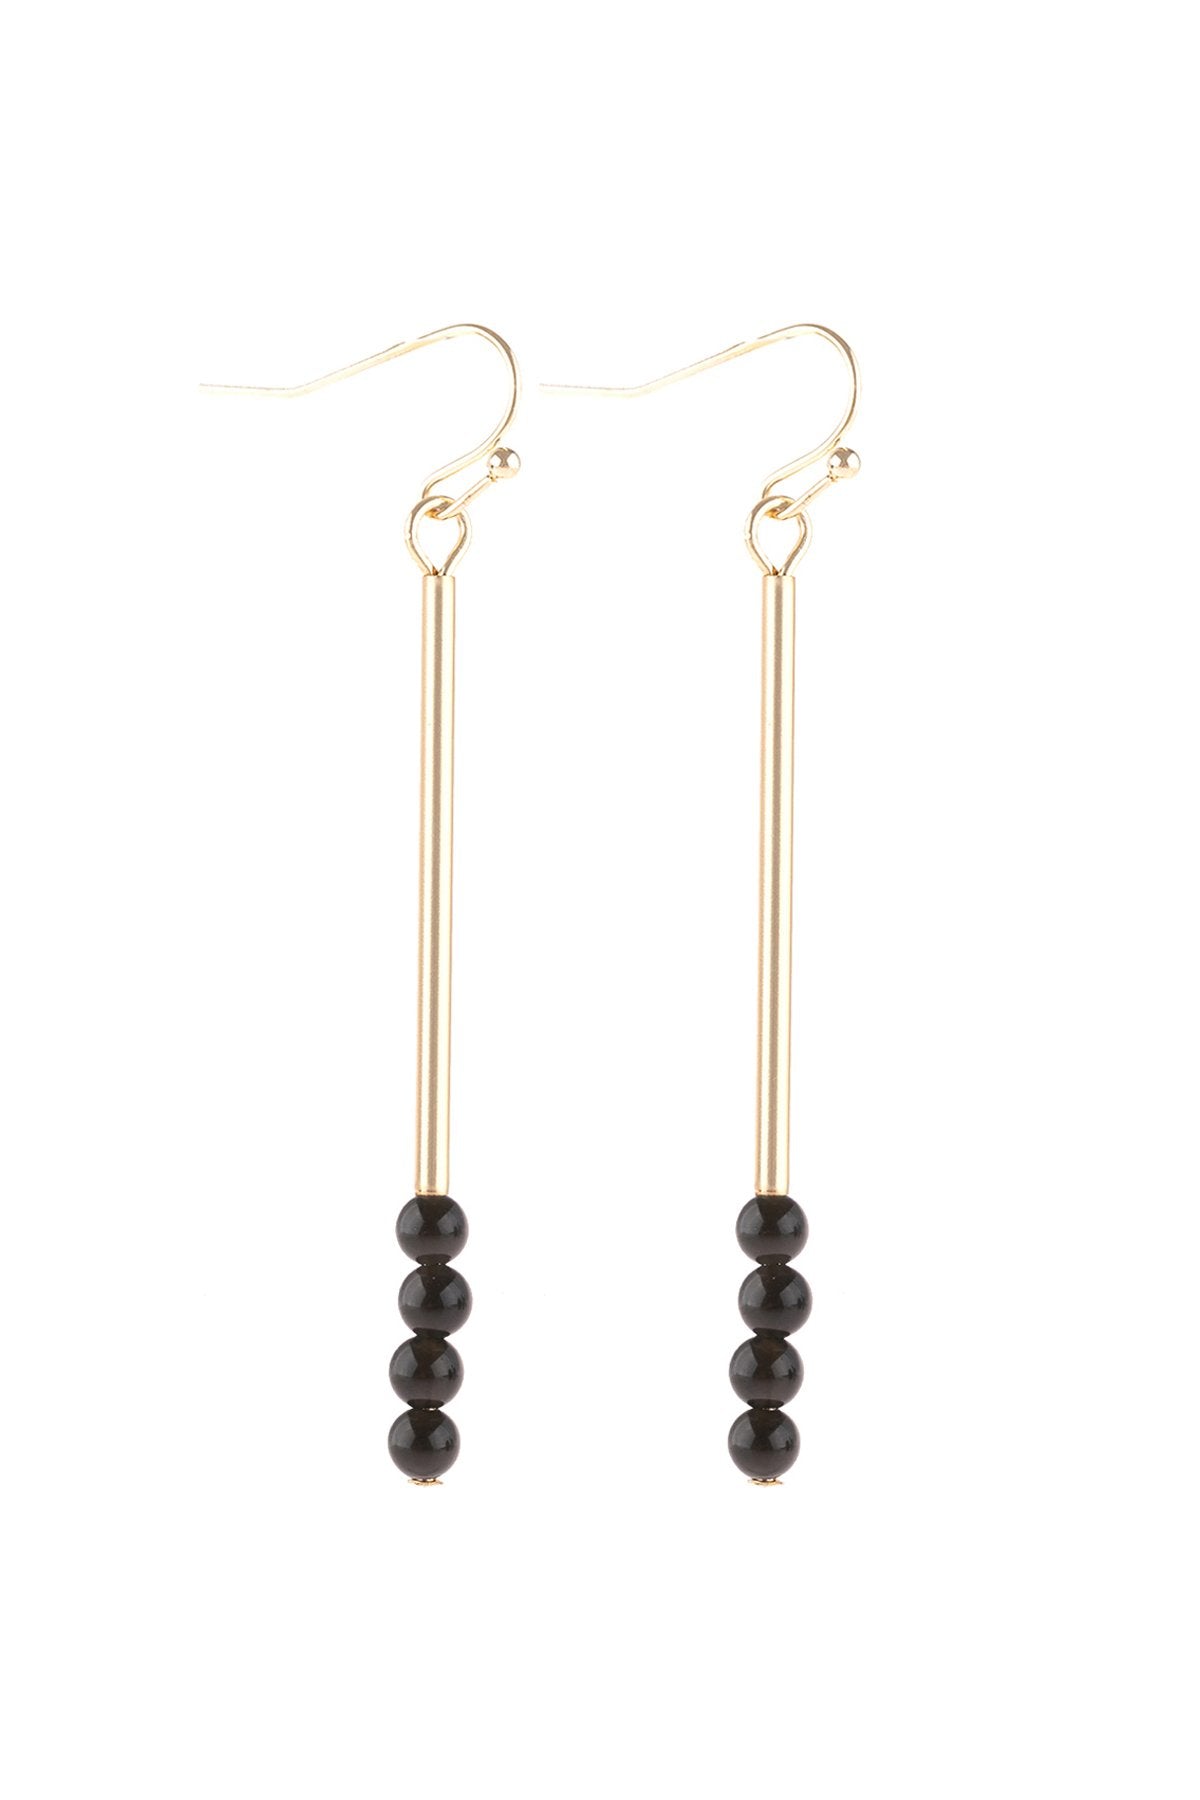 Hde3066 - Dangle Beads Hook Earrings